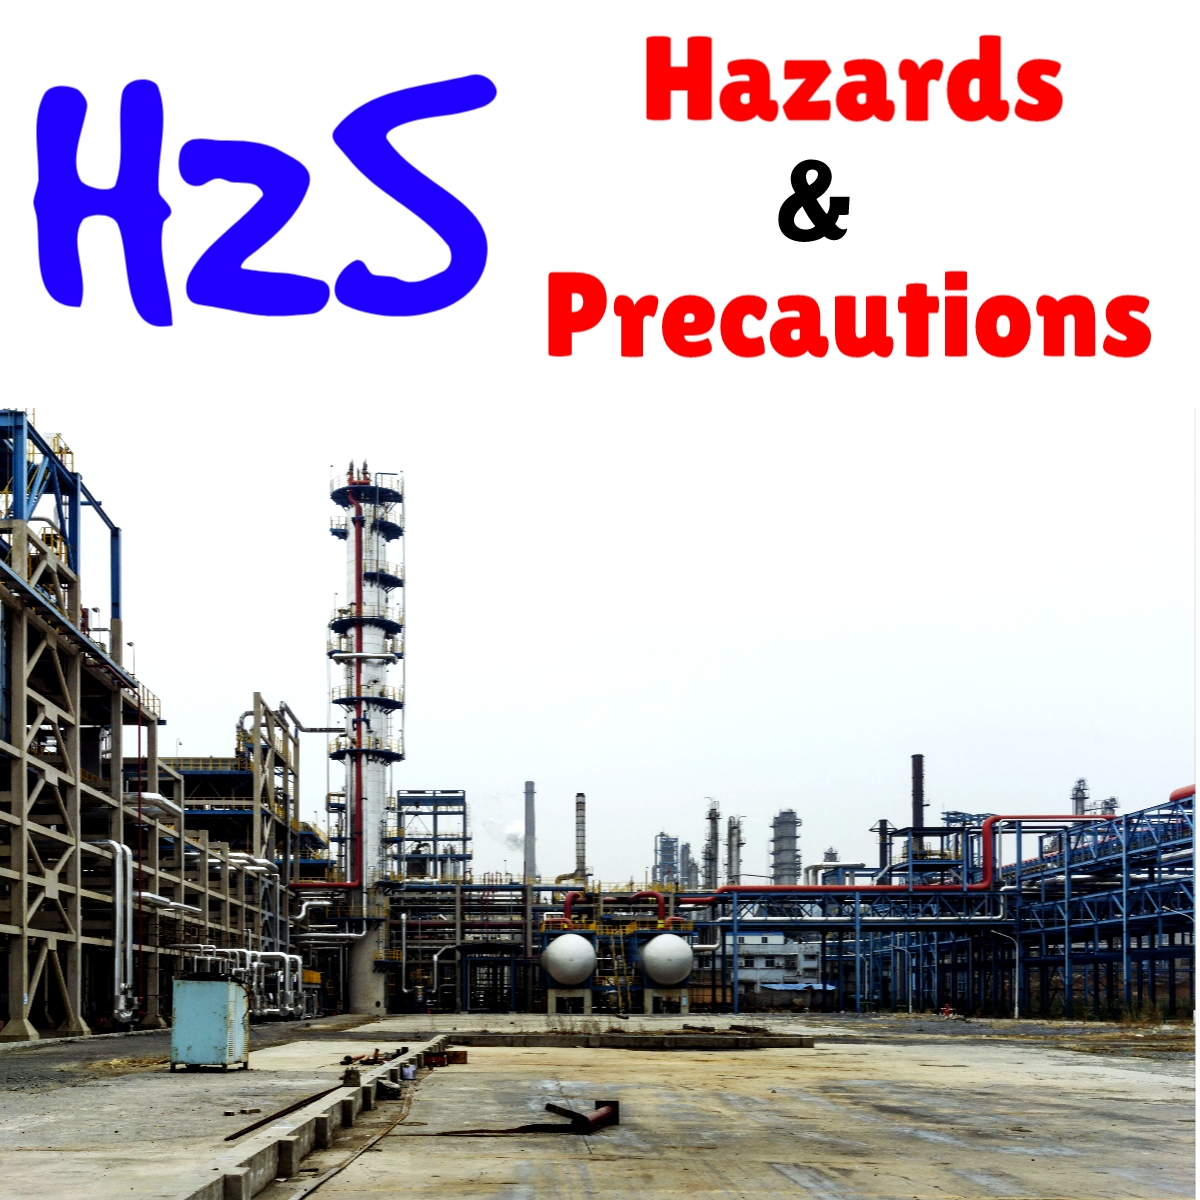 h2s-gas-hazards-safety-precautions